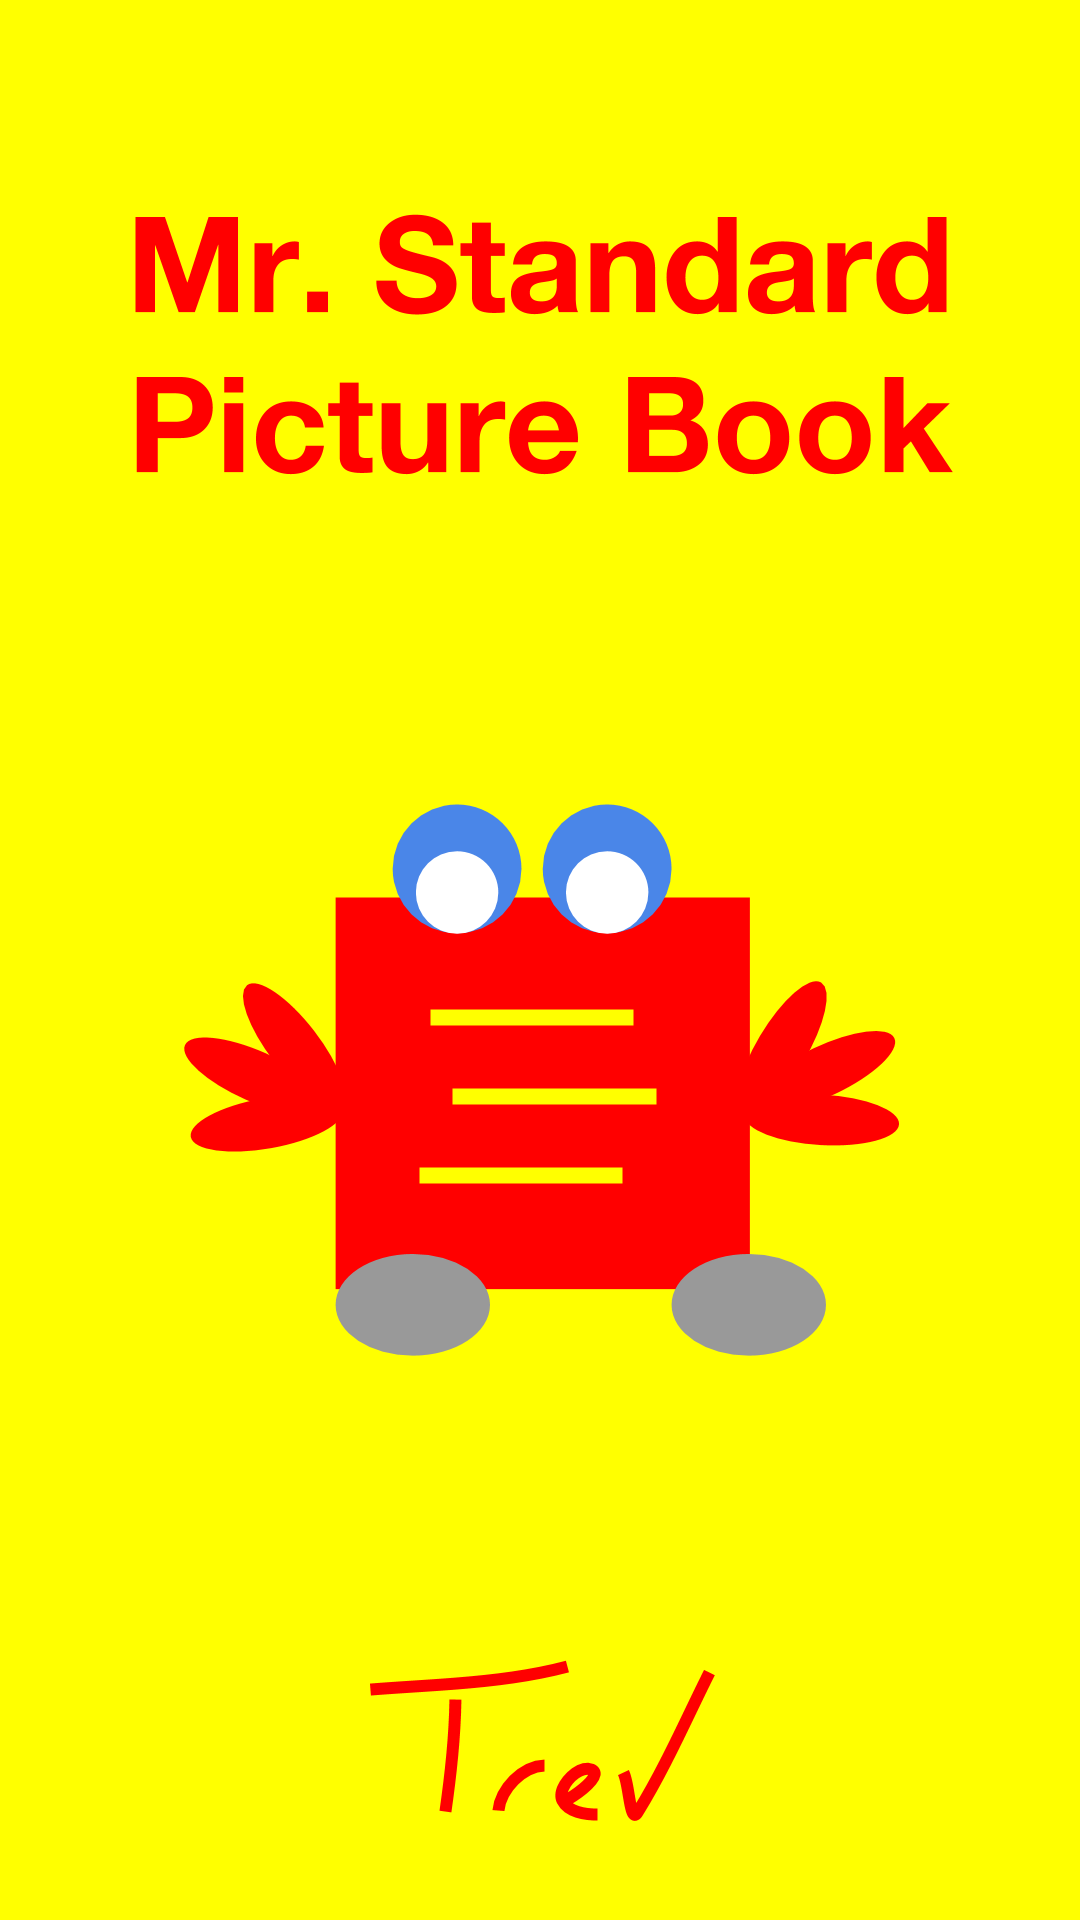 Mr. Standard Picture Book